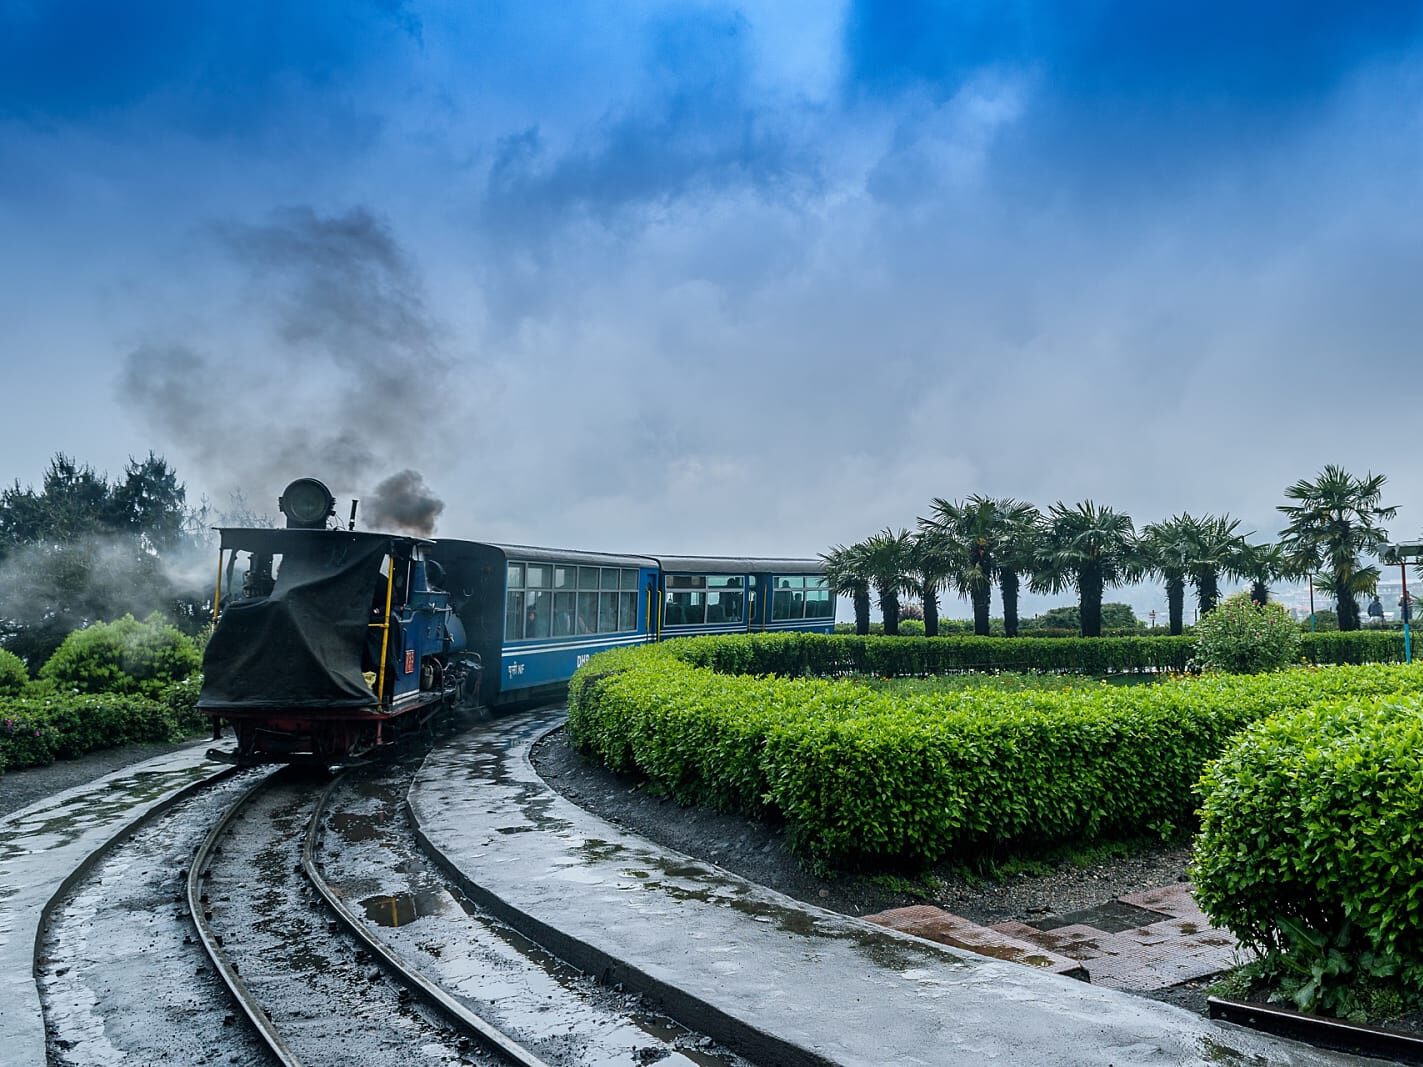 Darjeeling - The Land of Thunder